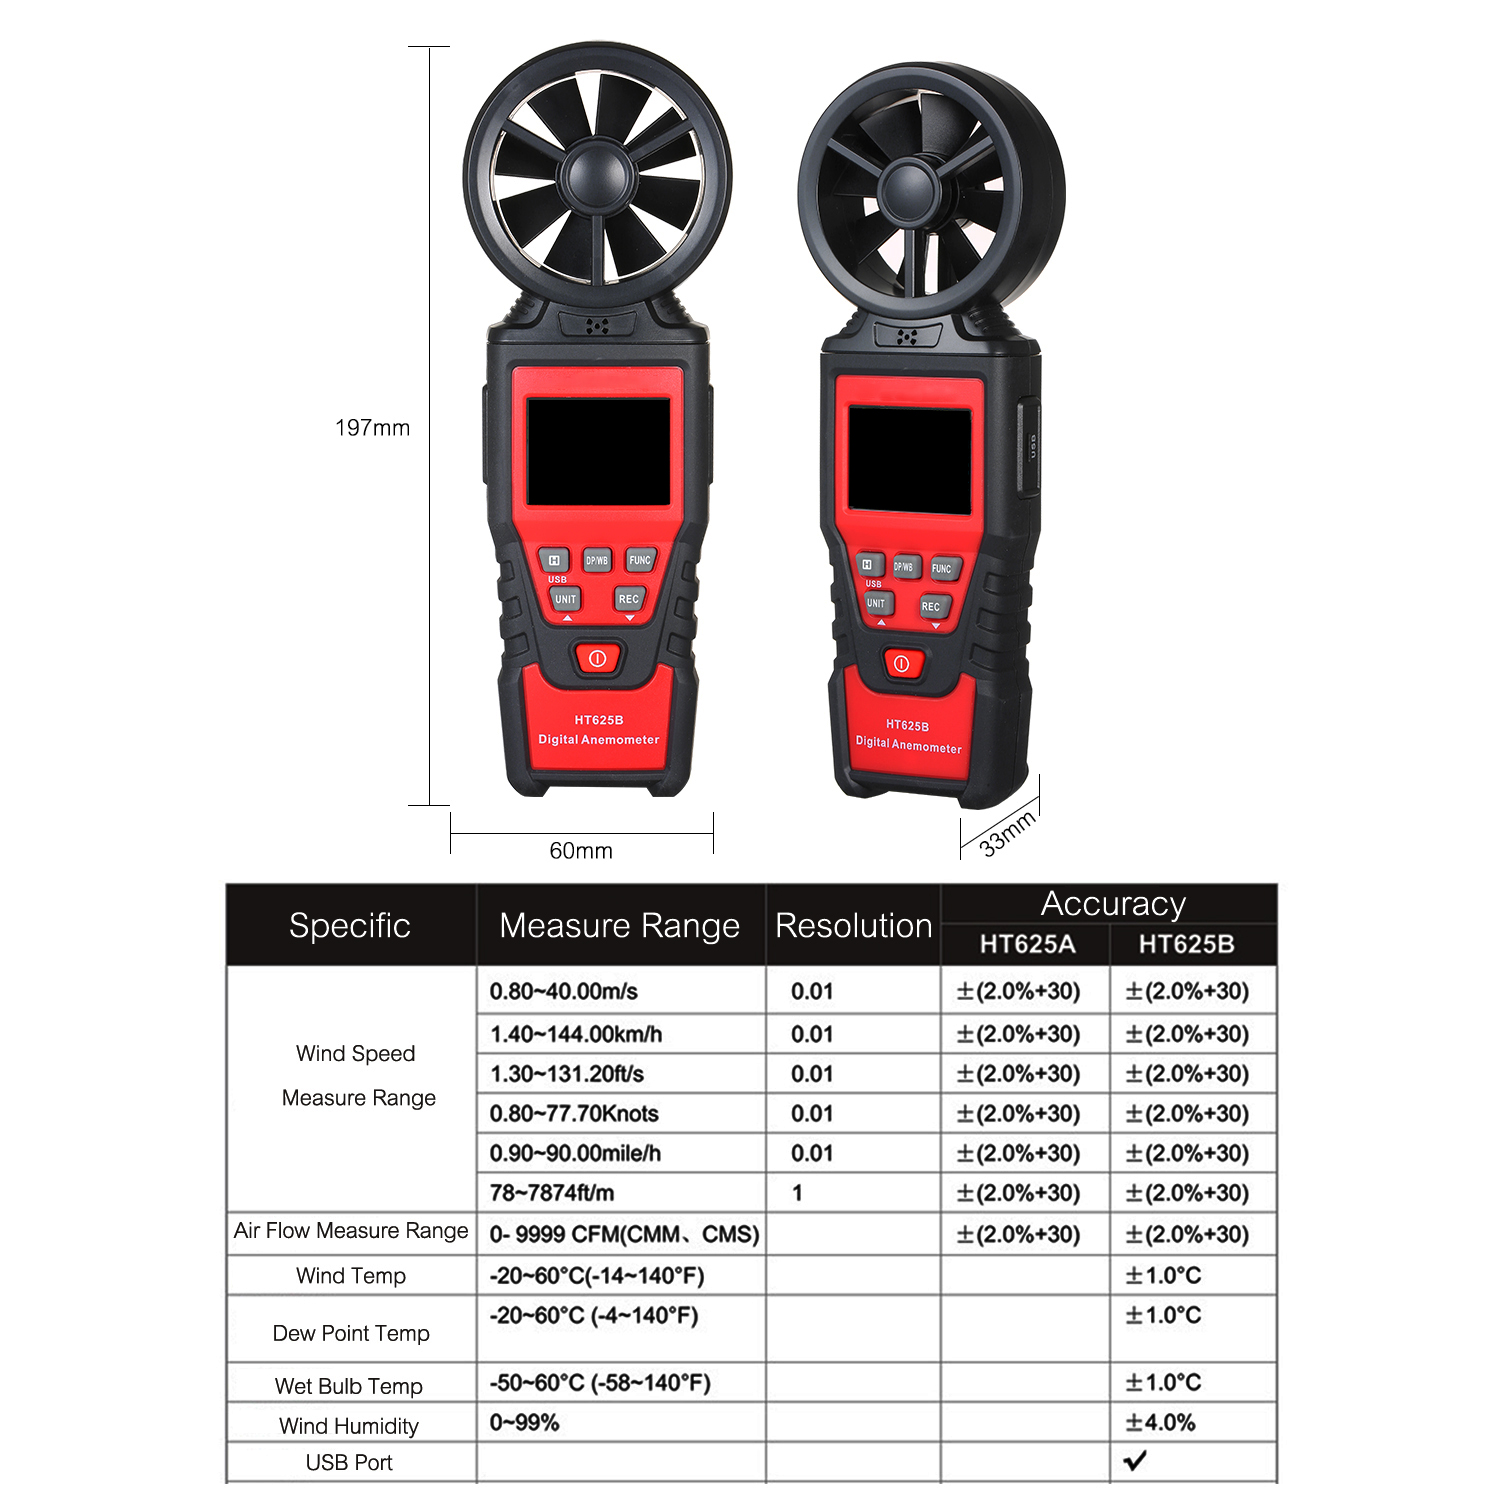 Handheld Anemometer Digital Wind Speed Meter with USB, LCD Color Display Measures Wind Speed Humidity Temperature 8